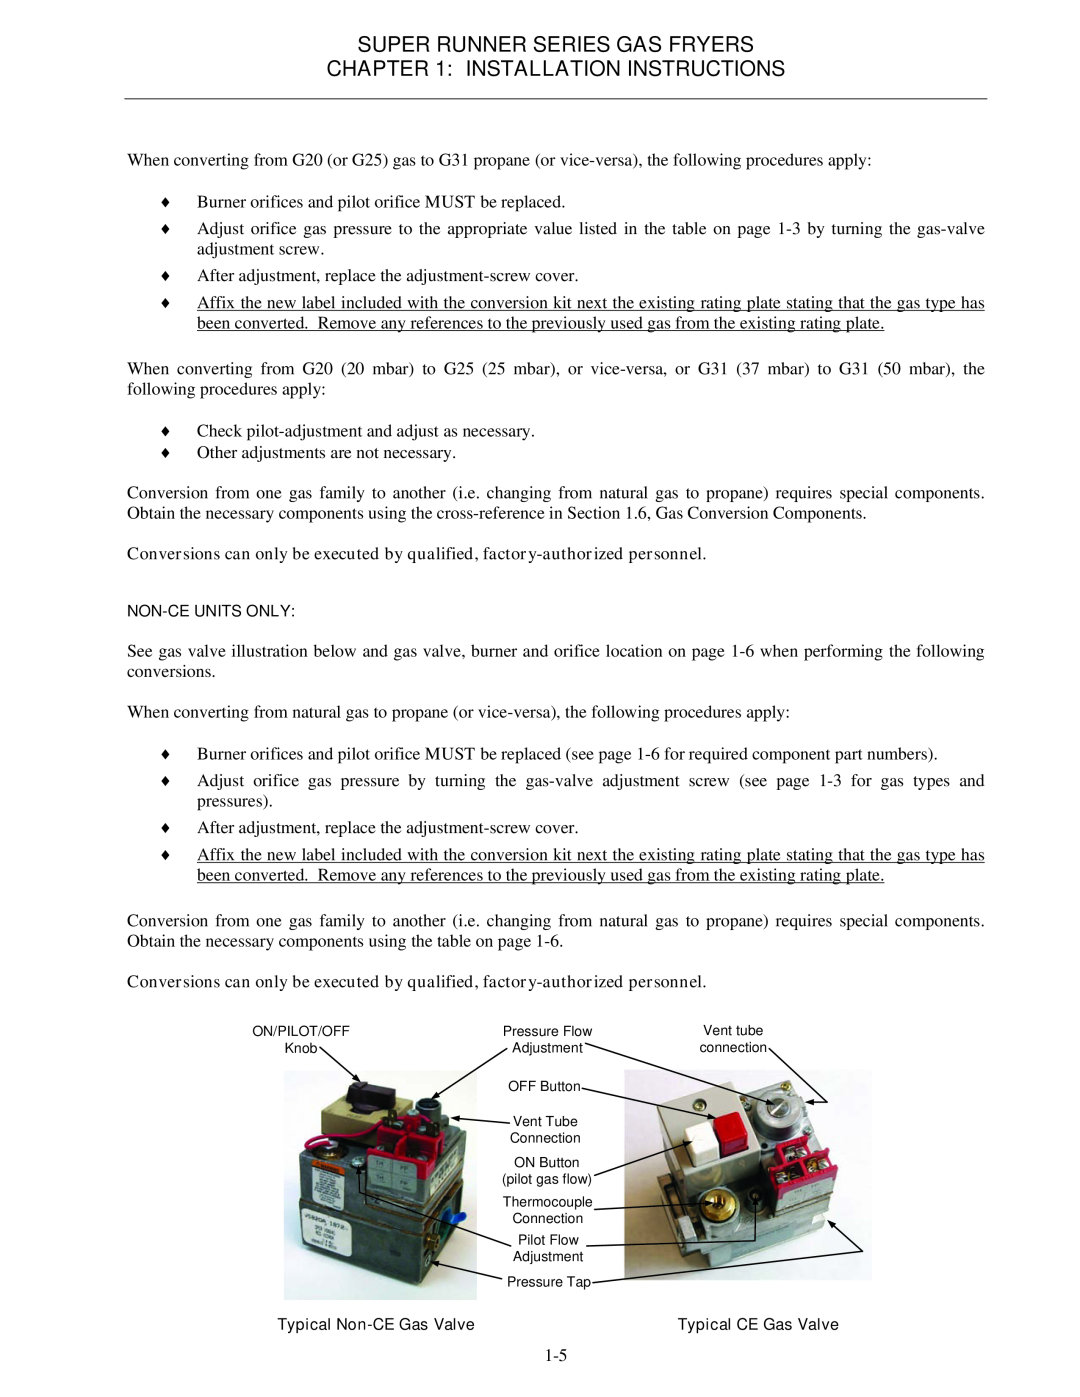 Frymaster Series SR52, Series SR62 operation manual Super Runner Series Gas Fryers Installation Instructions 